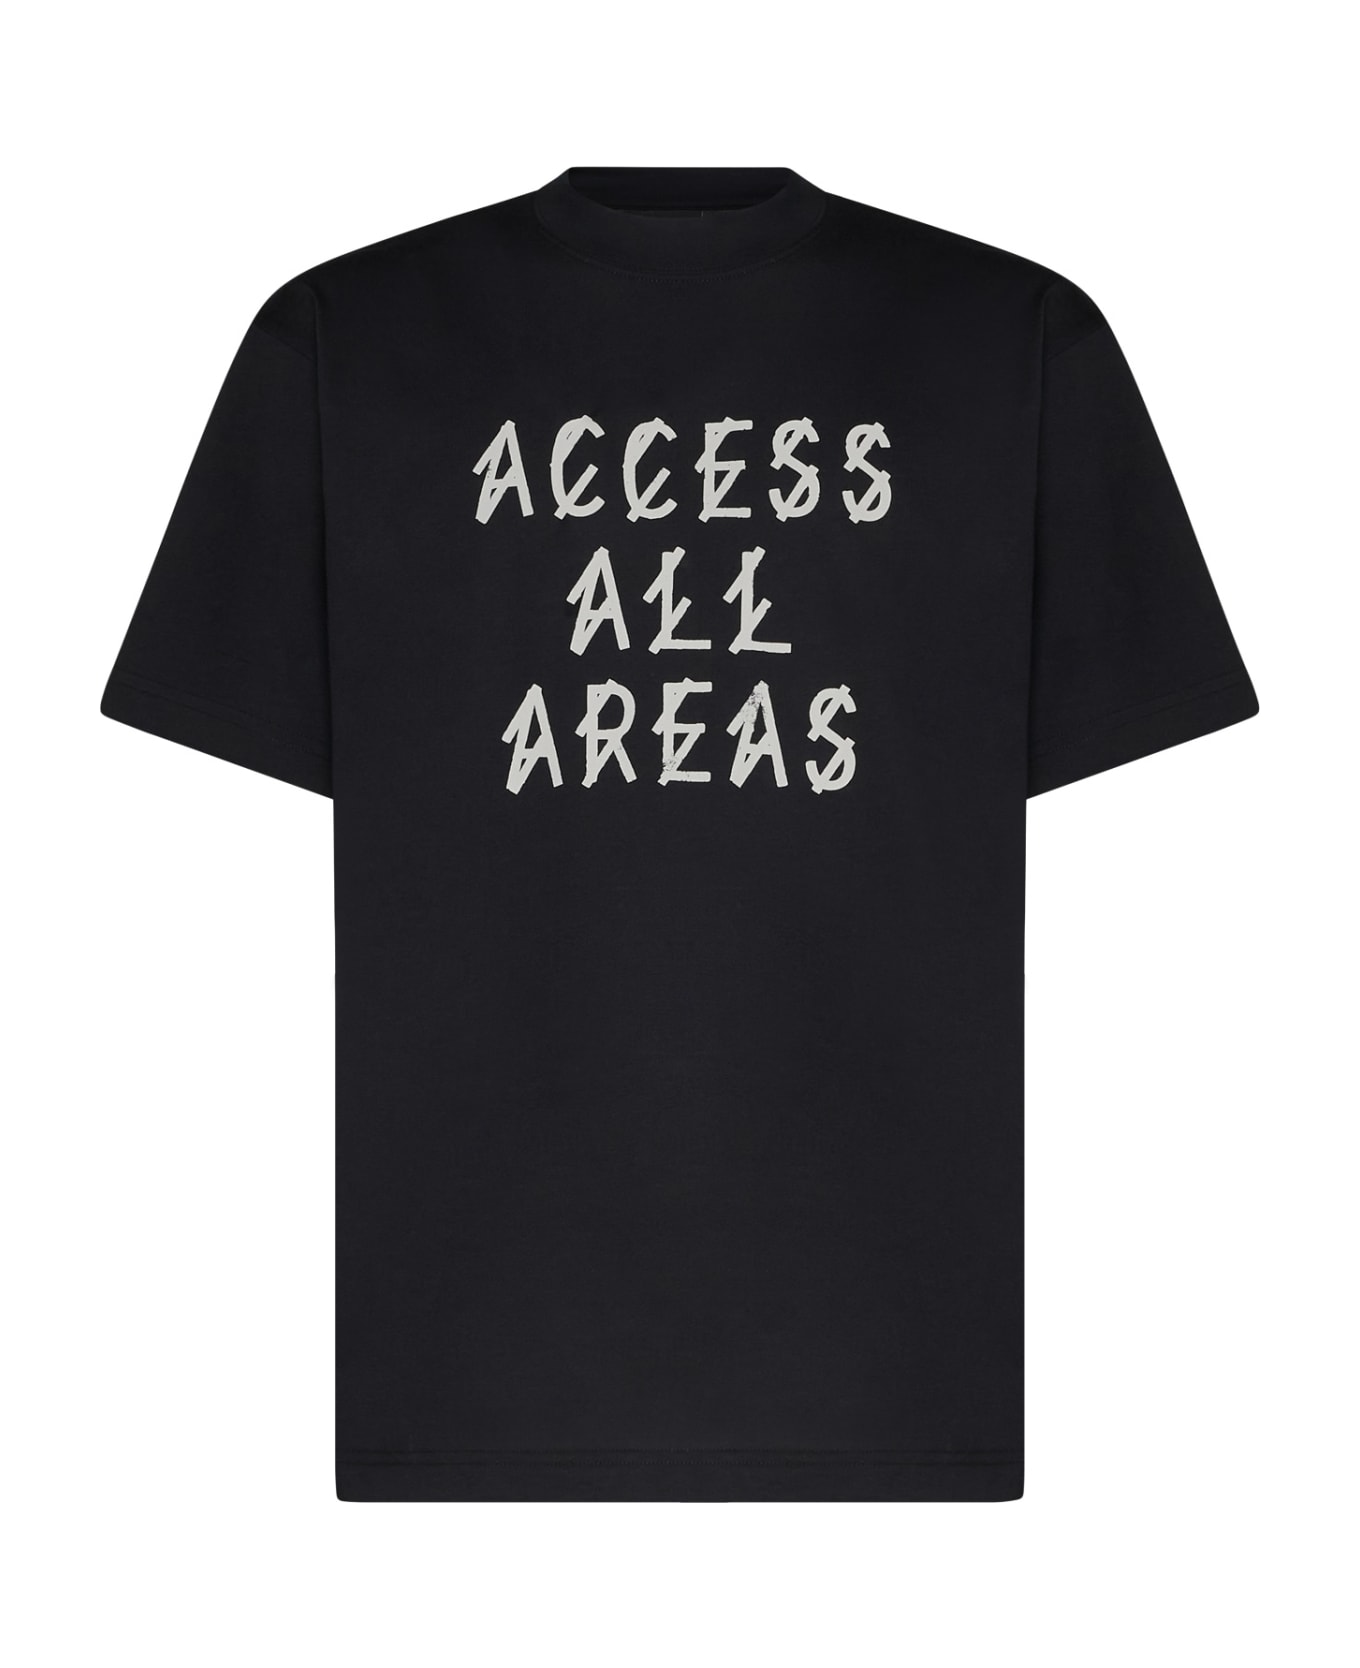 44 Label Group T-Shirt - Black+aaa print